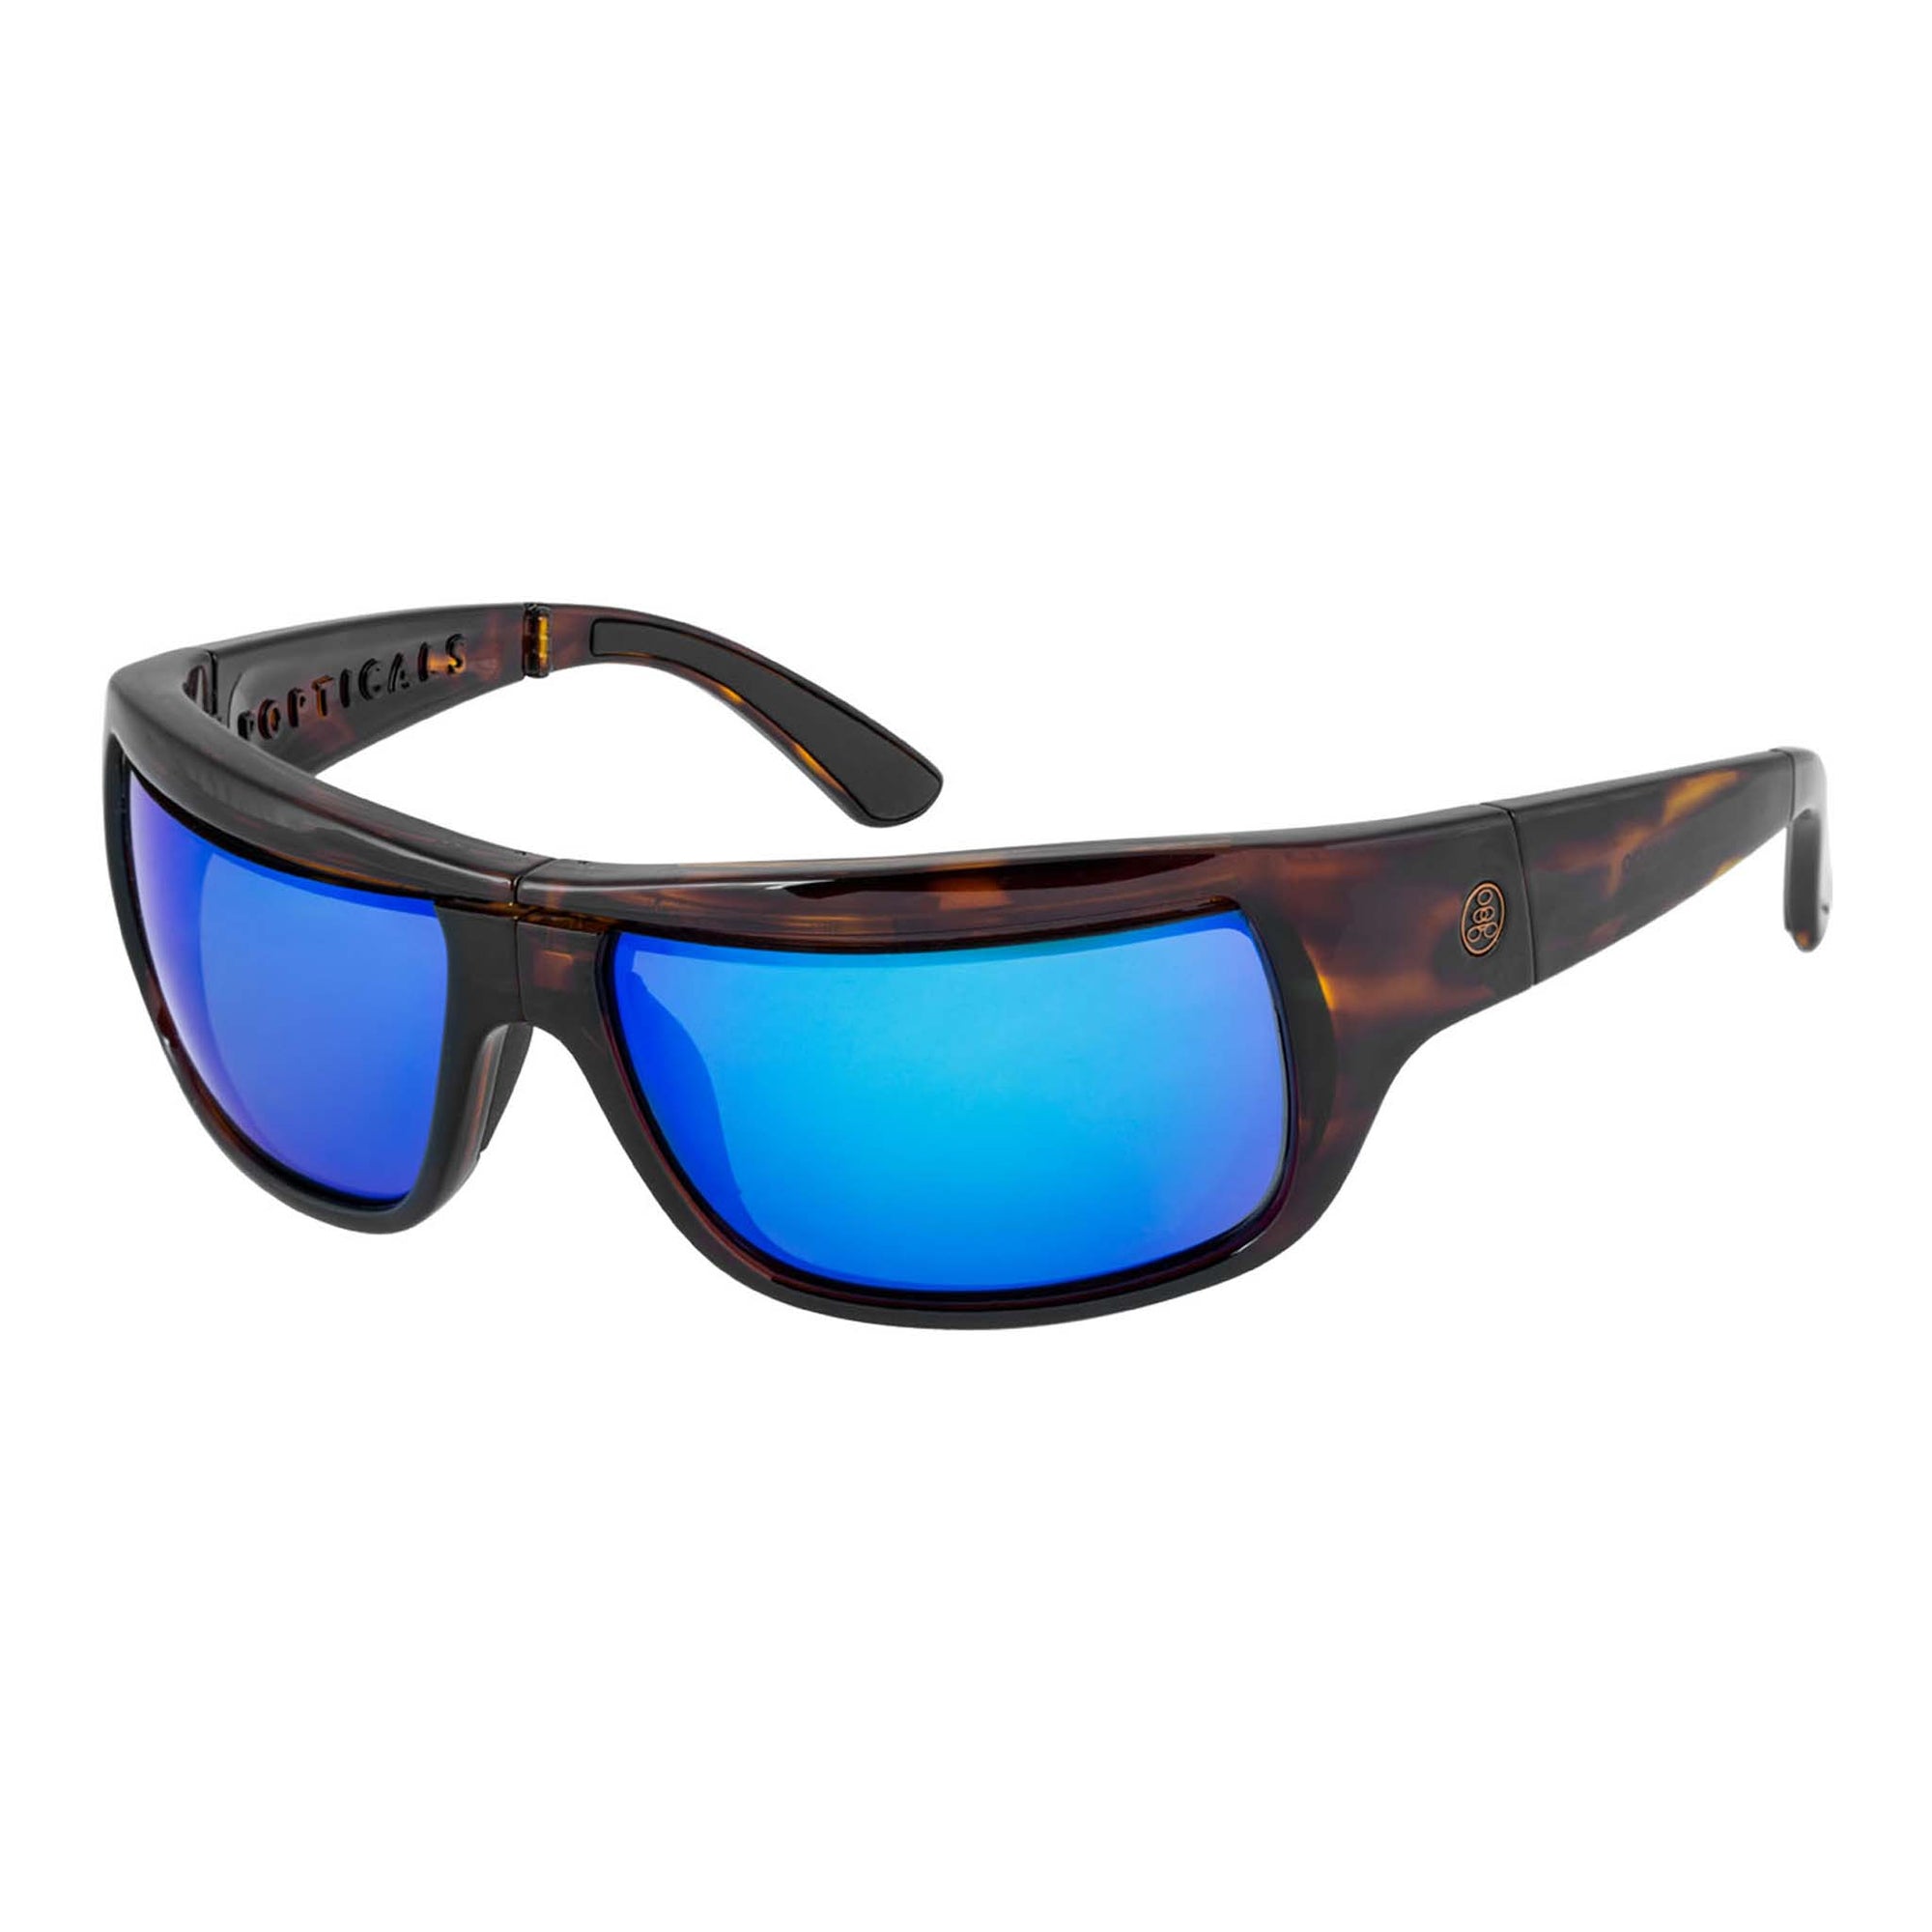 Popticals, Premium Compact Sunglasses, PopH2O, 010070-CTUN, Polarized Sunglasses, Gloss Tortoise Frame, Gray Lenses w/Blue Mirror Finish, Glam View